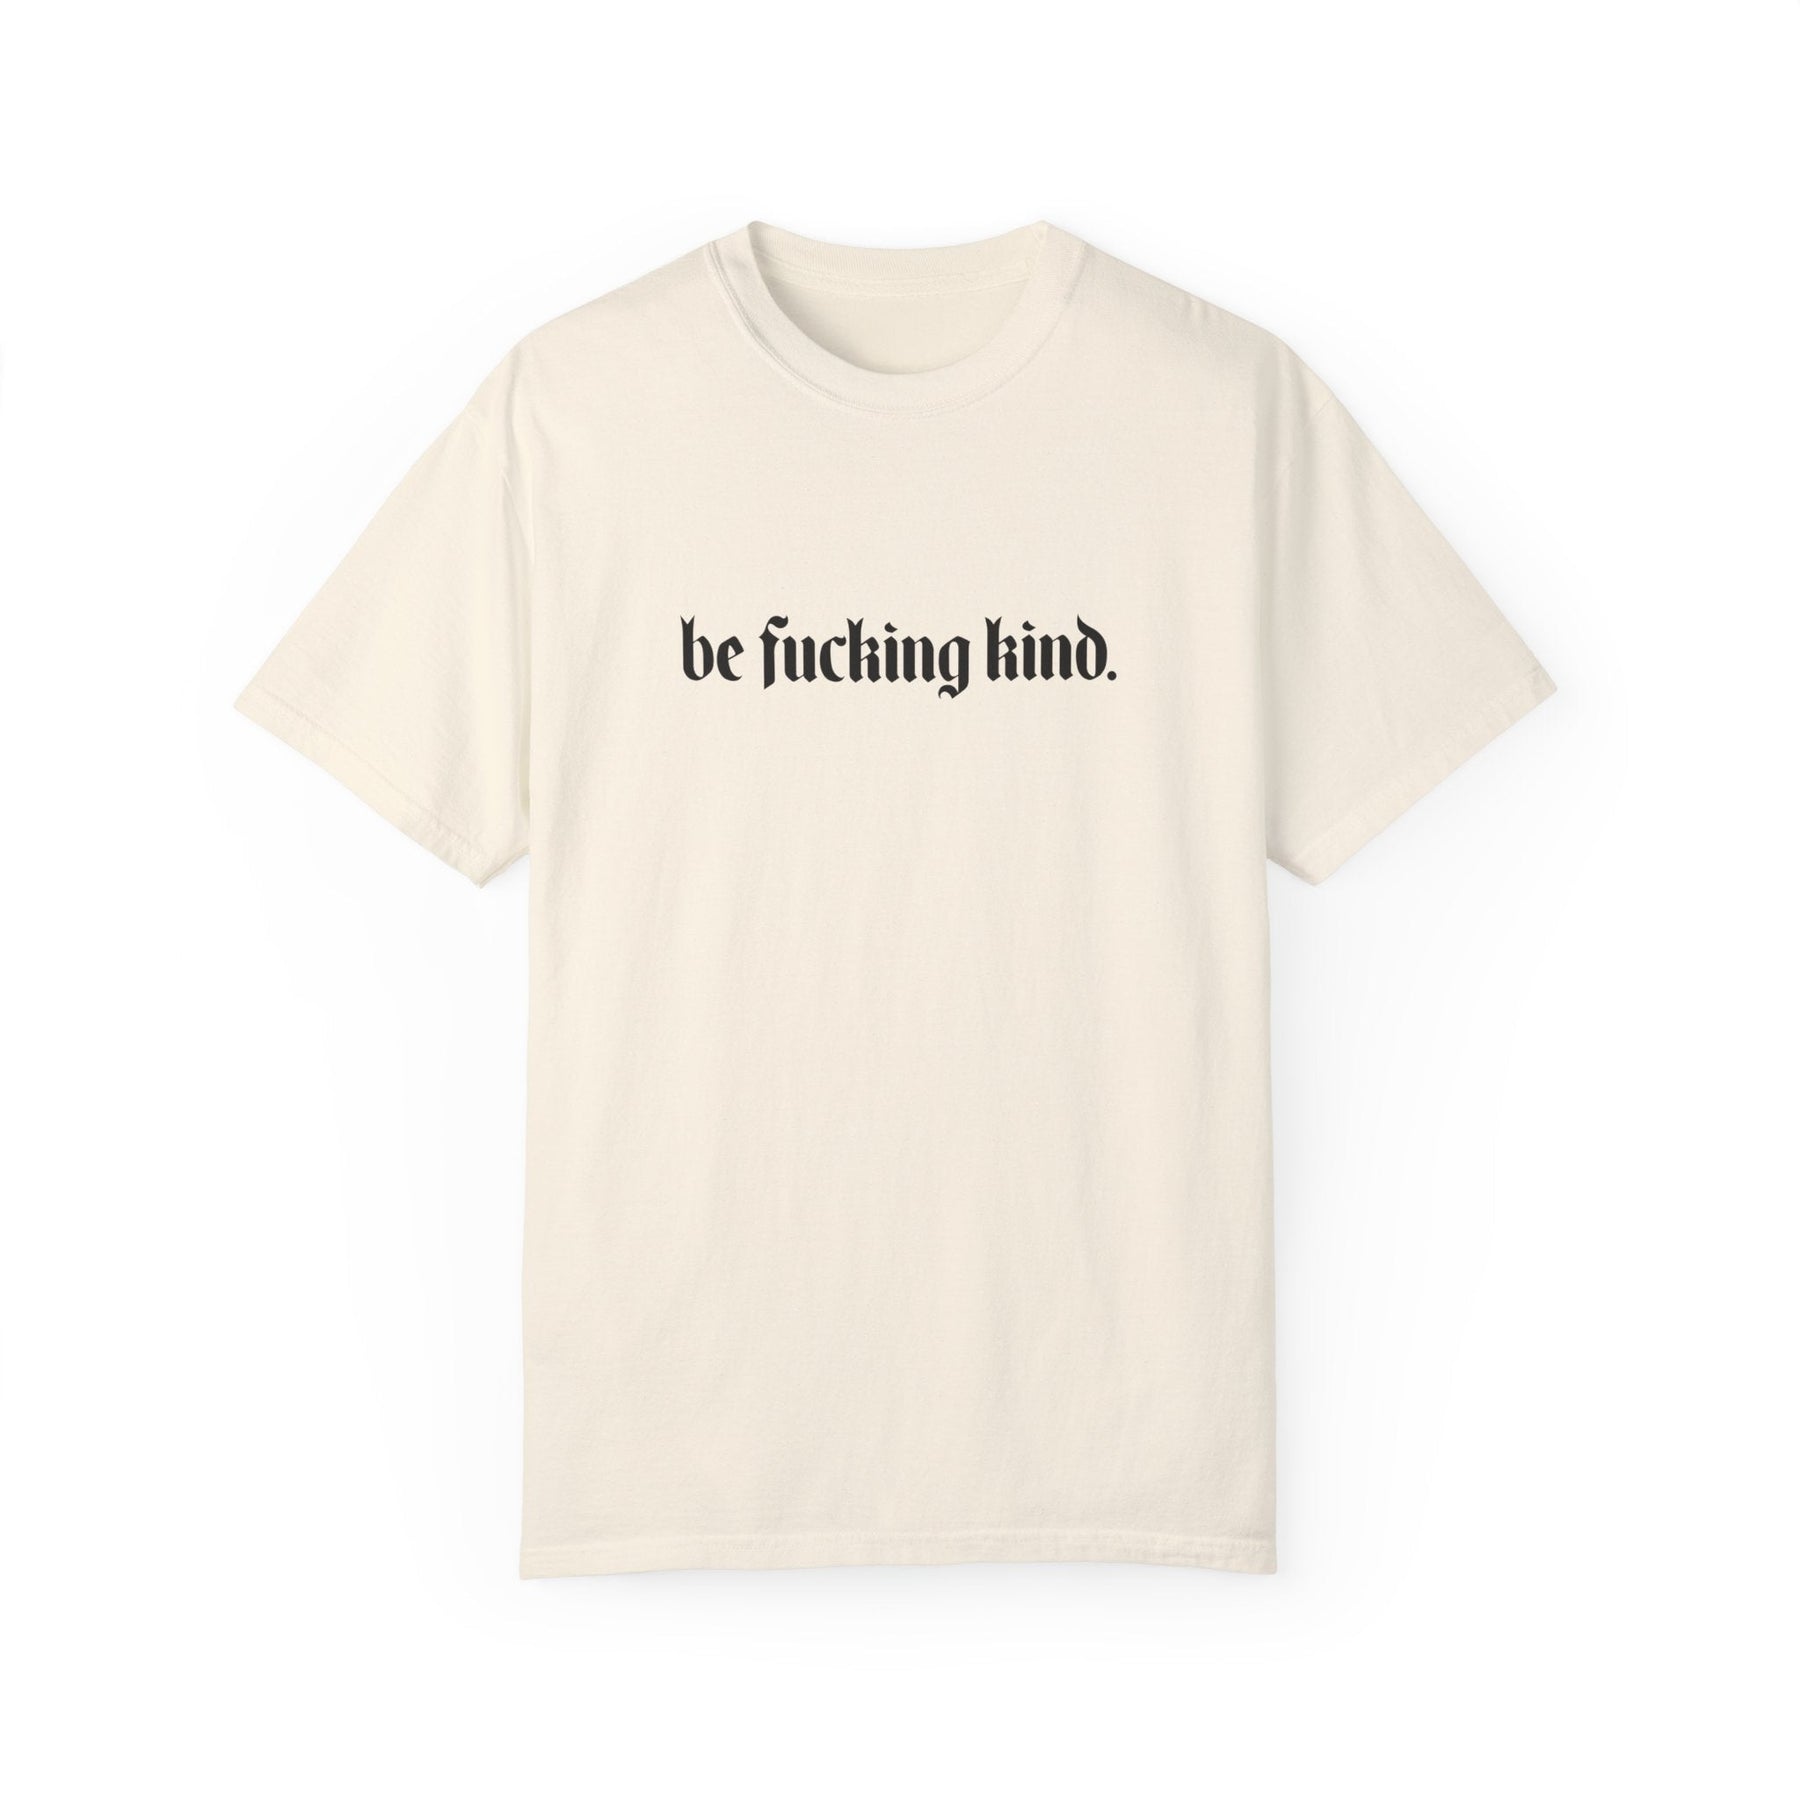 Be Fucking Kind Comfy Tee - Goth Cloth Co.T - Shirt17441191170304494141